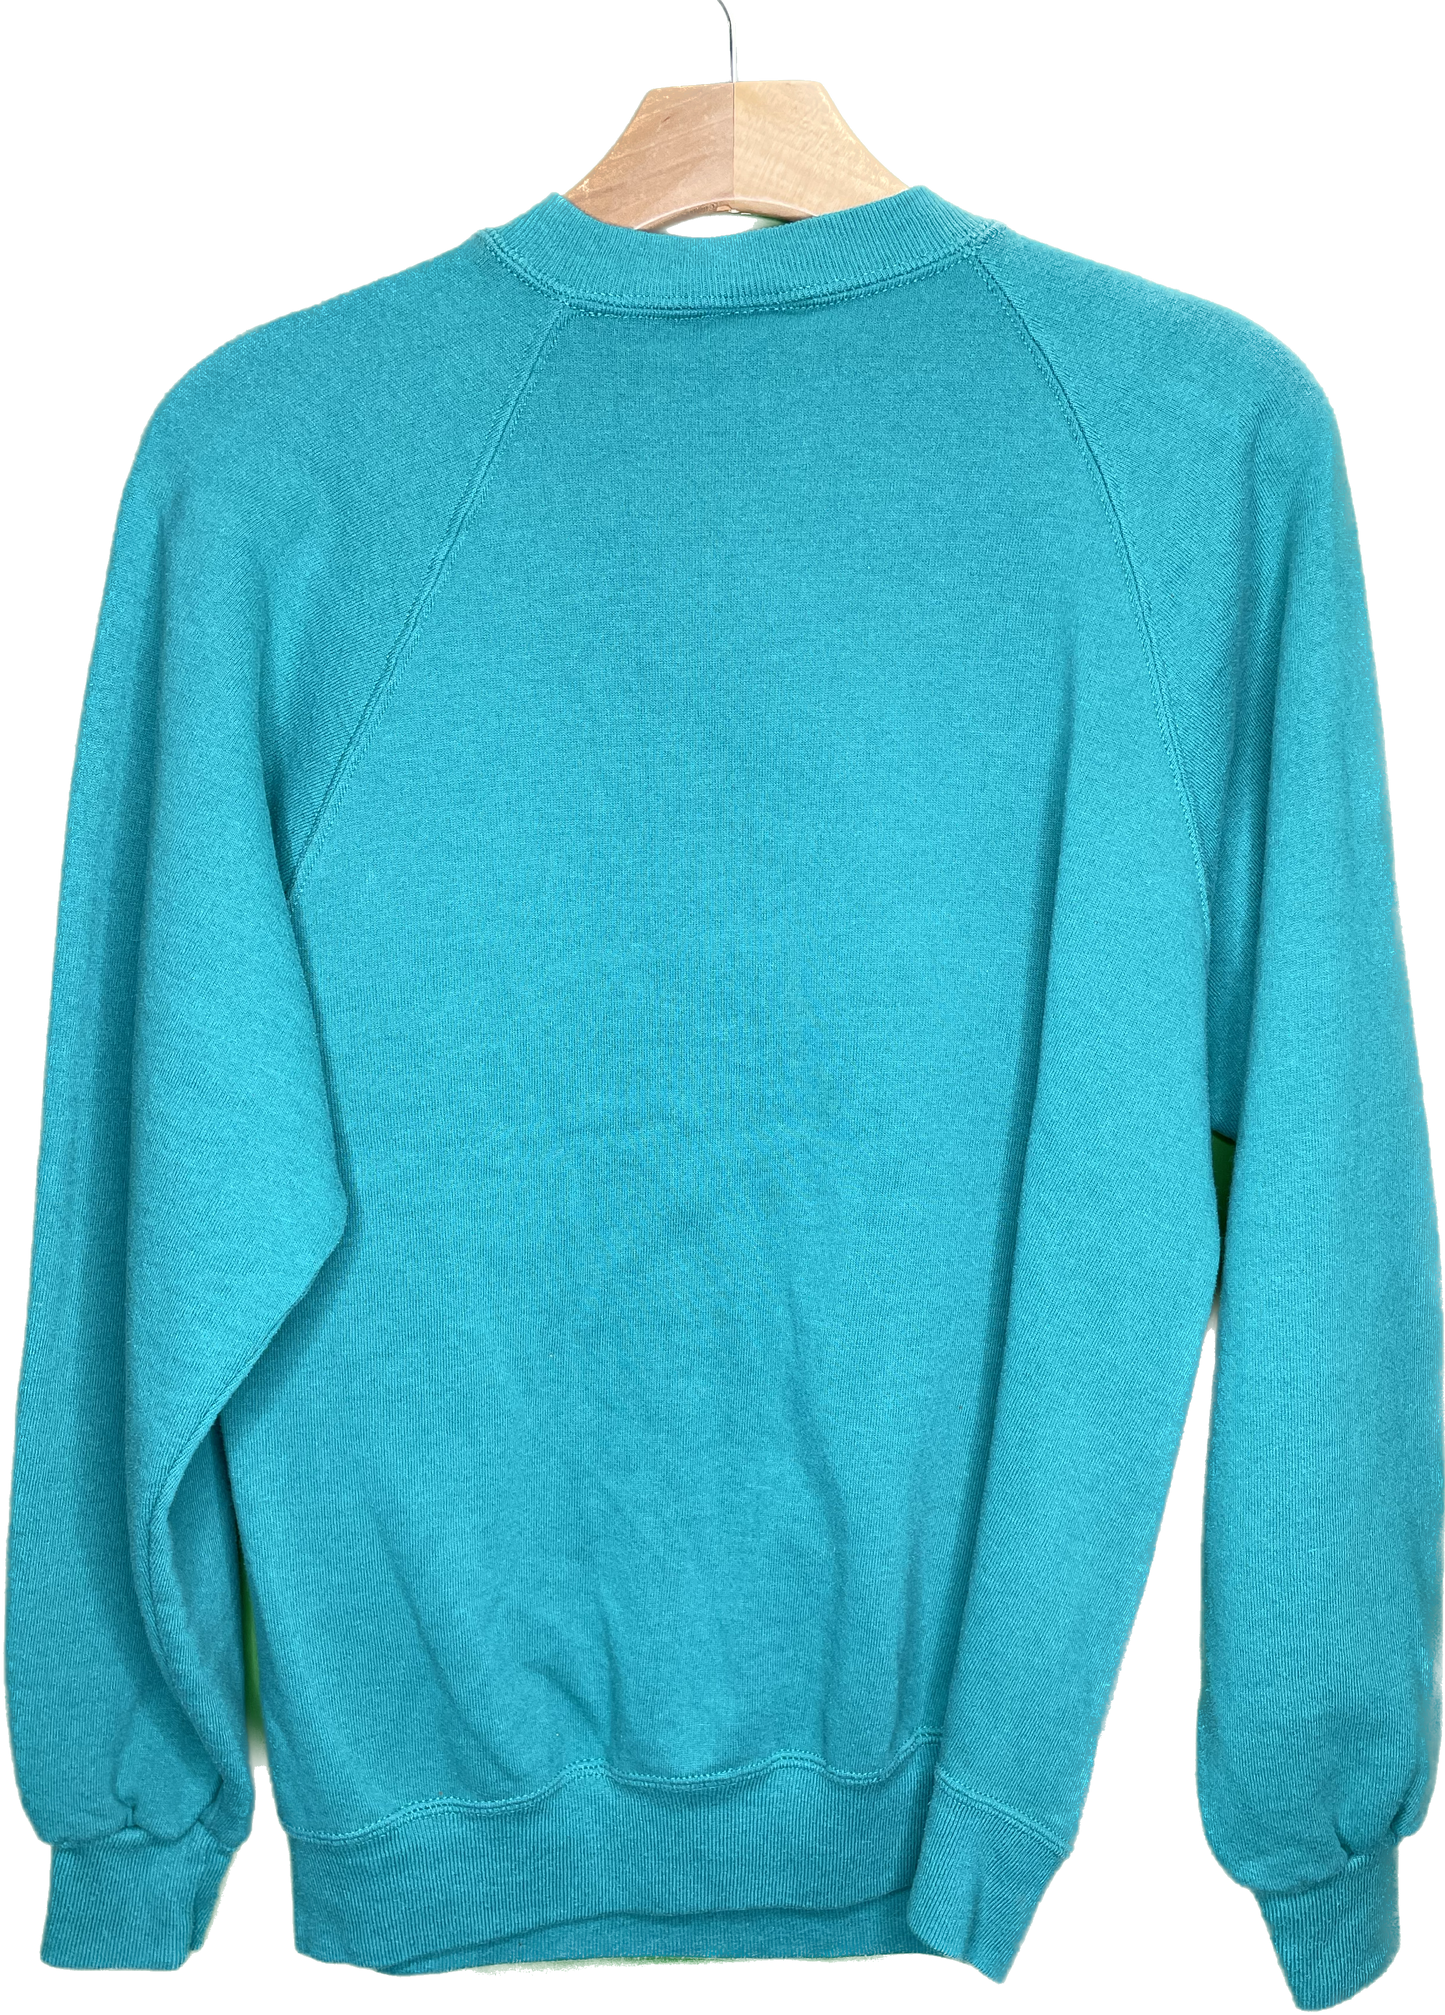 Vintage M Recycle Reduce Rewear Village Vintage Merch Teal 90s Crewneck Sweatshirt